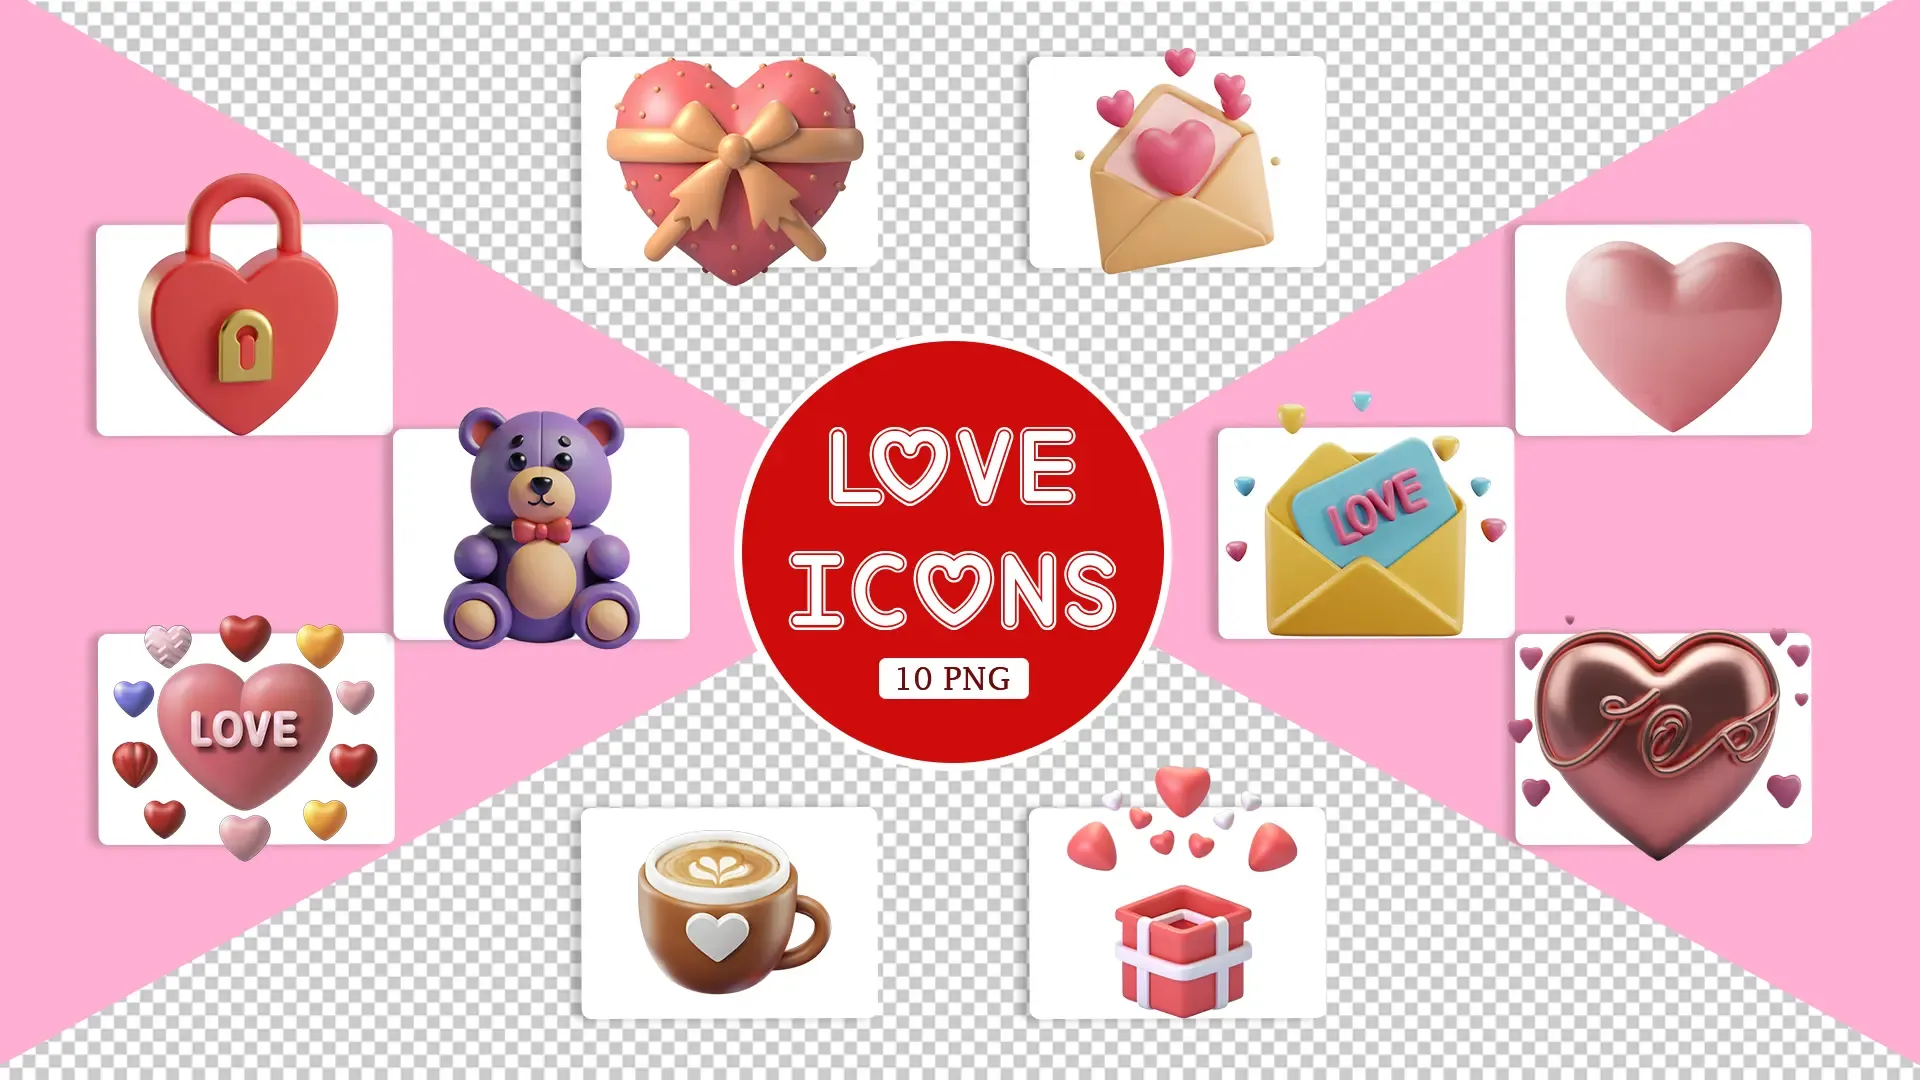 Romantic 3D Valentine Themed Icons